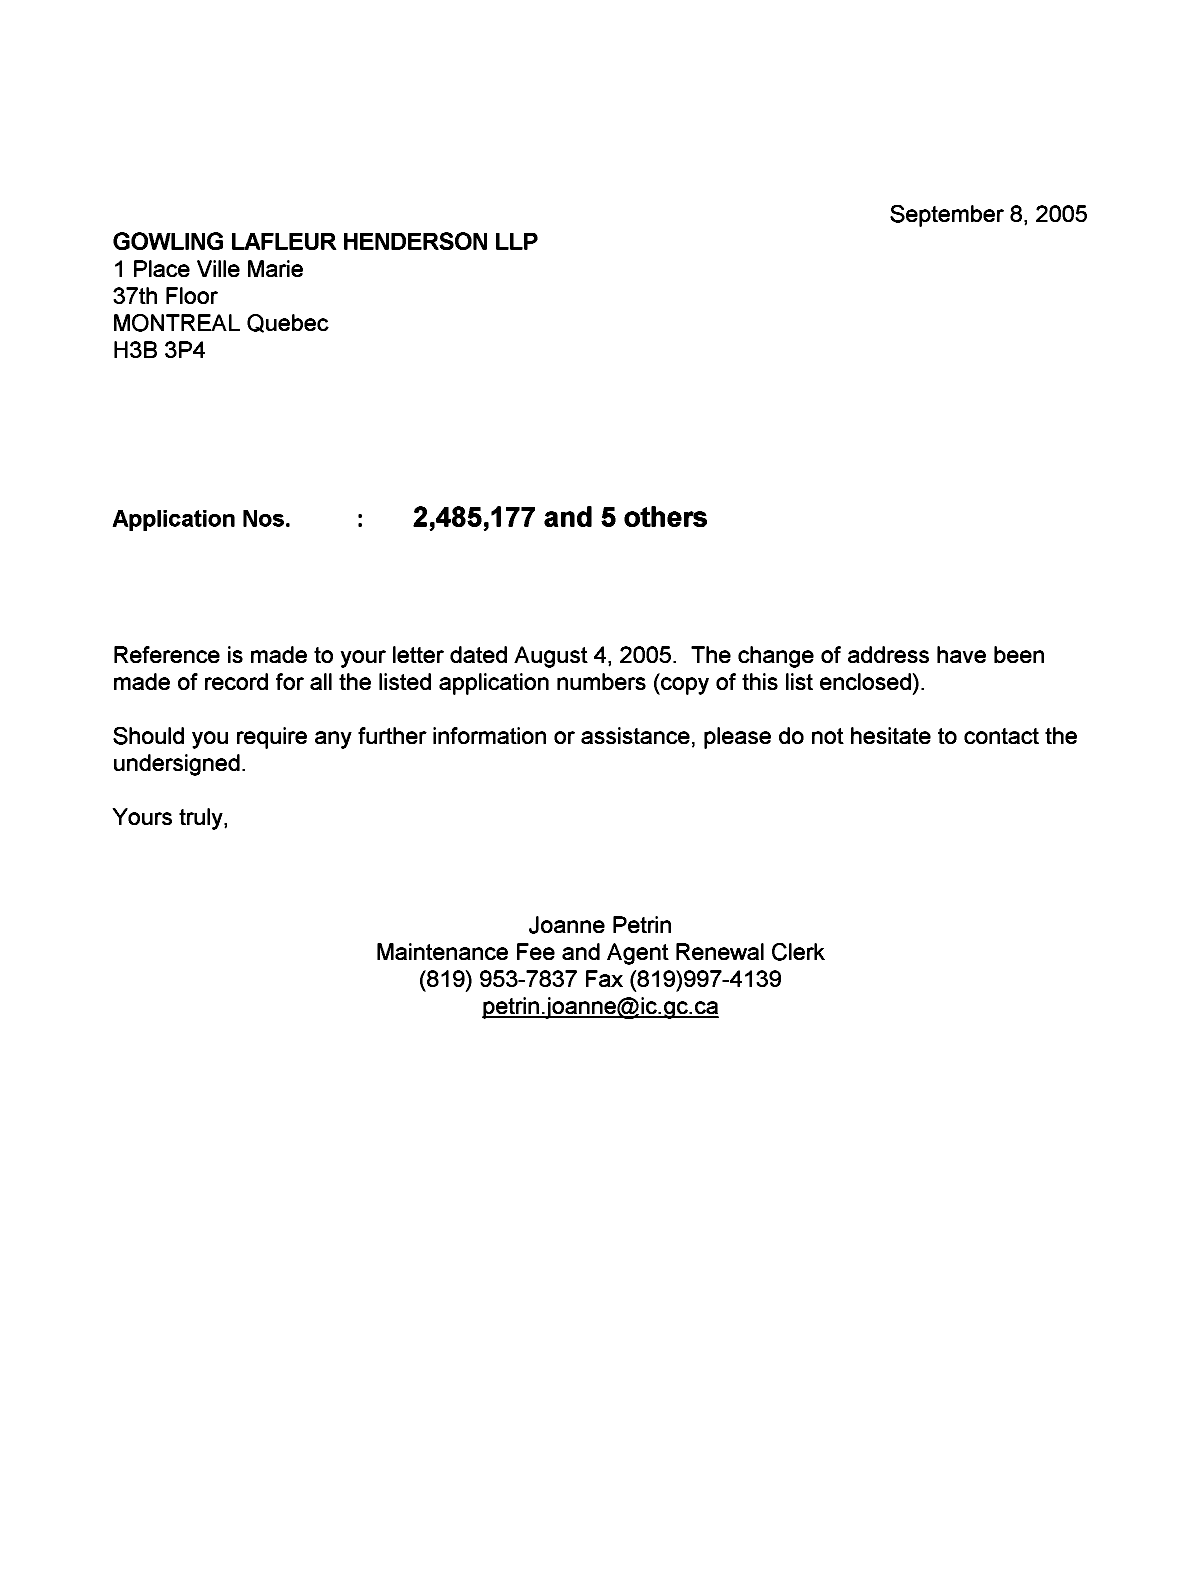 Canadian Patent Document 2384923. Correspondence 20050908. Image 1 of 1